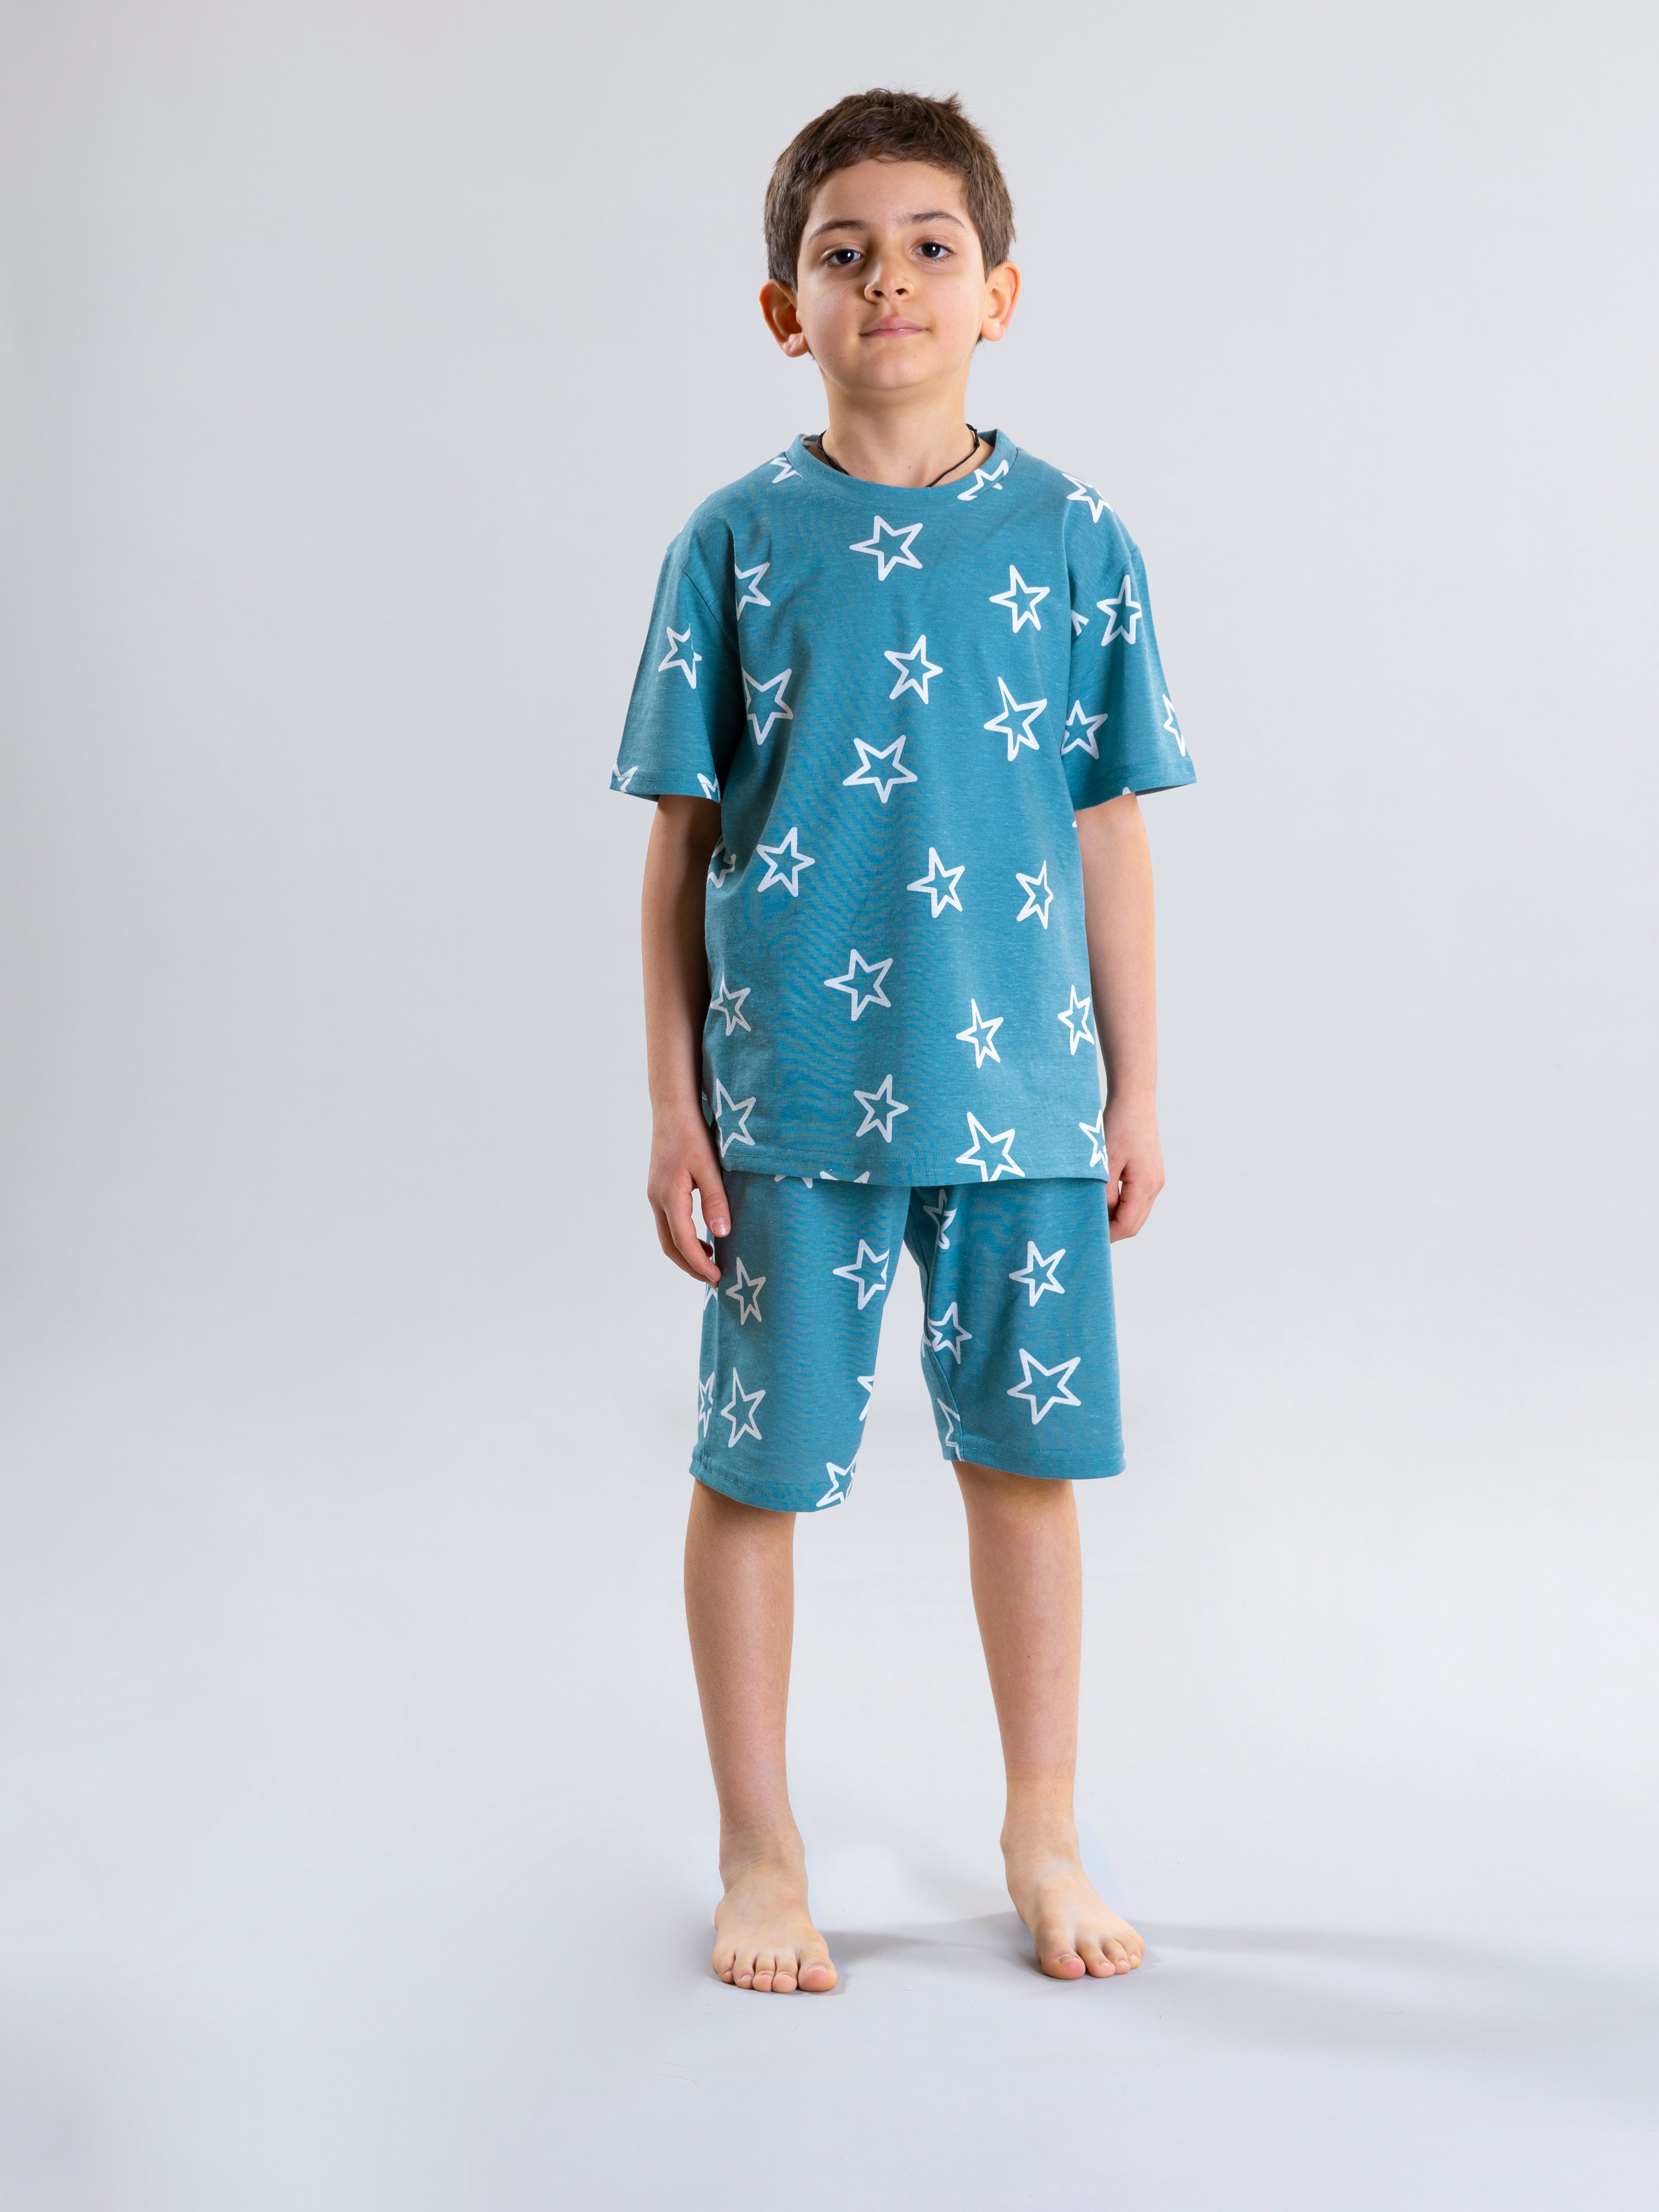 Star Design Pyjama Set For Boys - Green